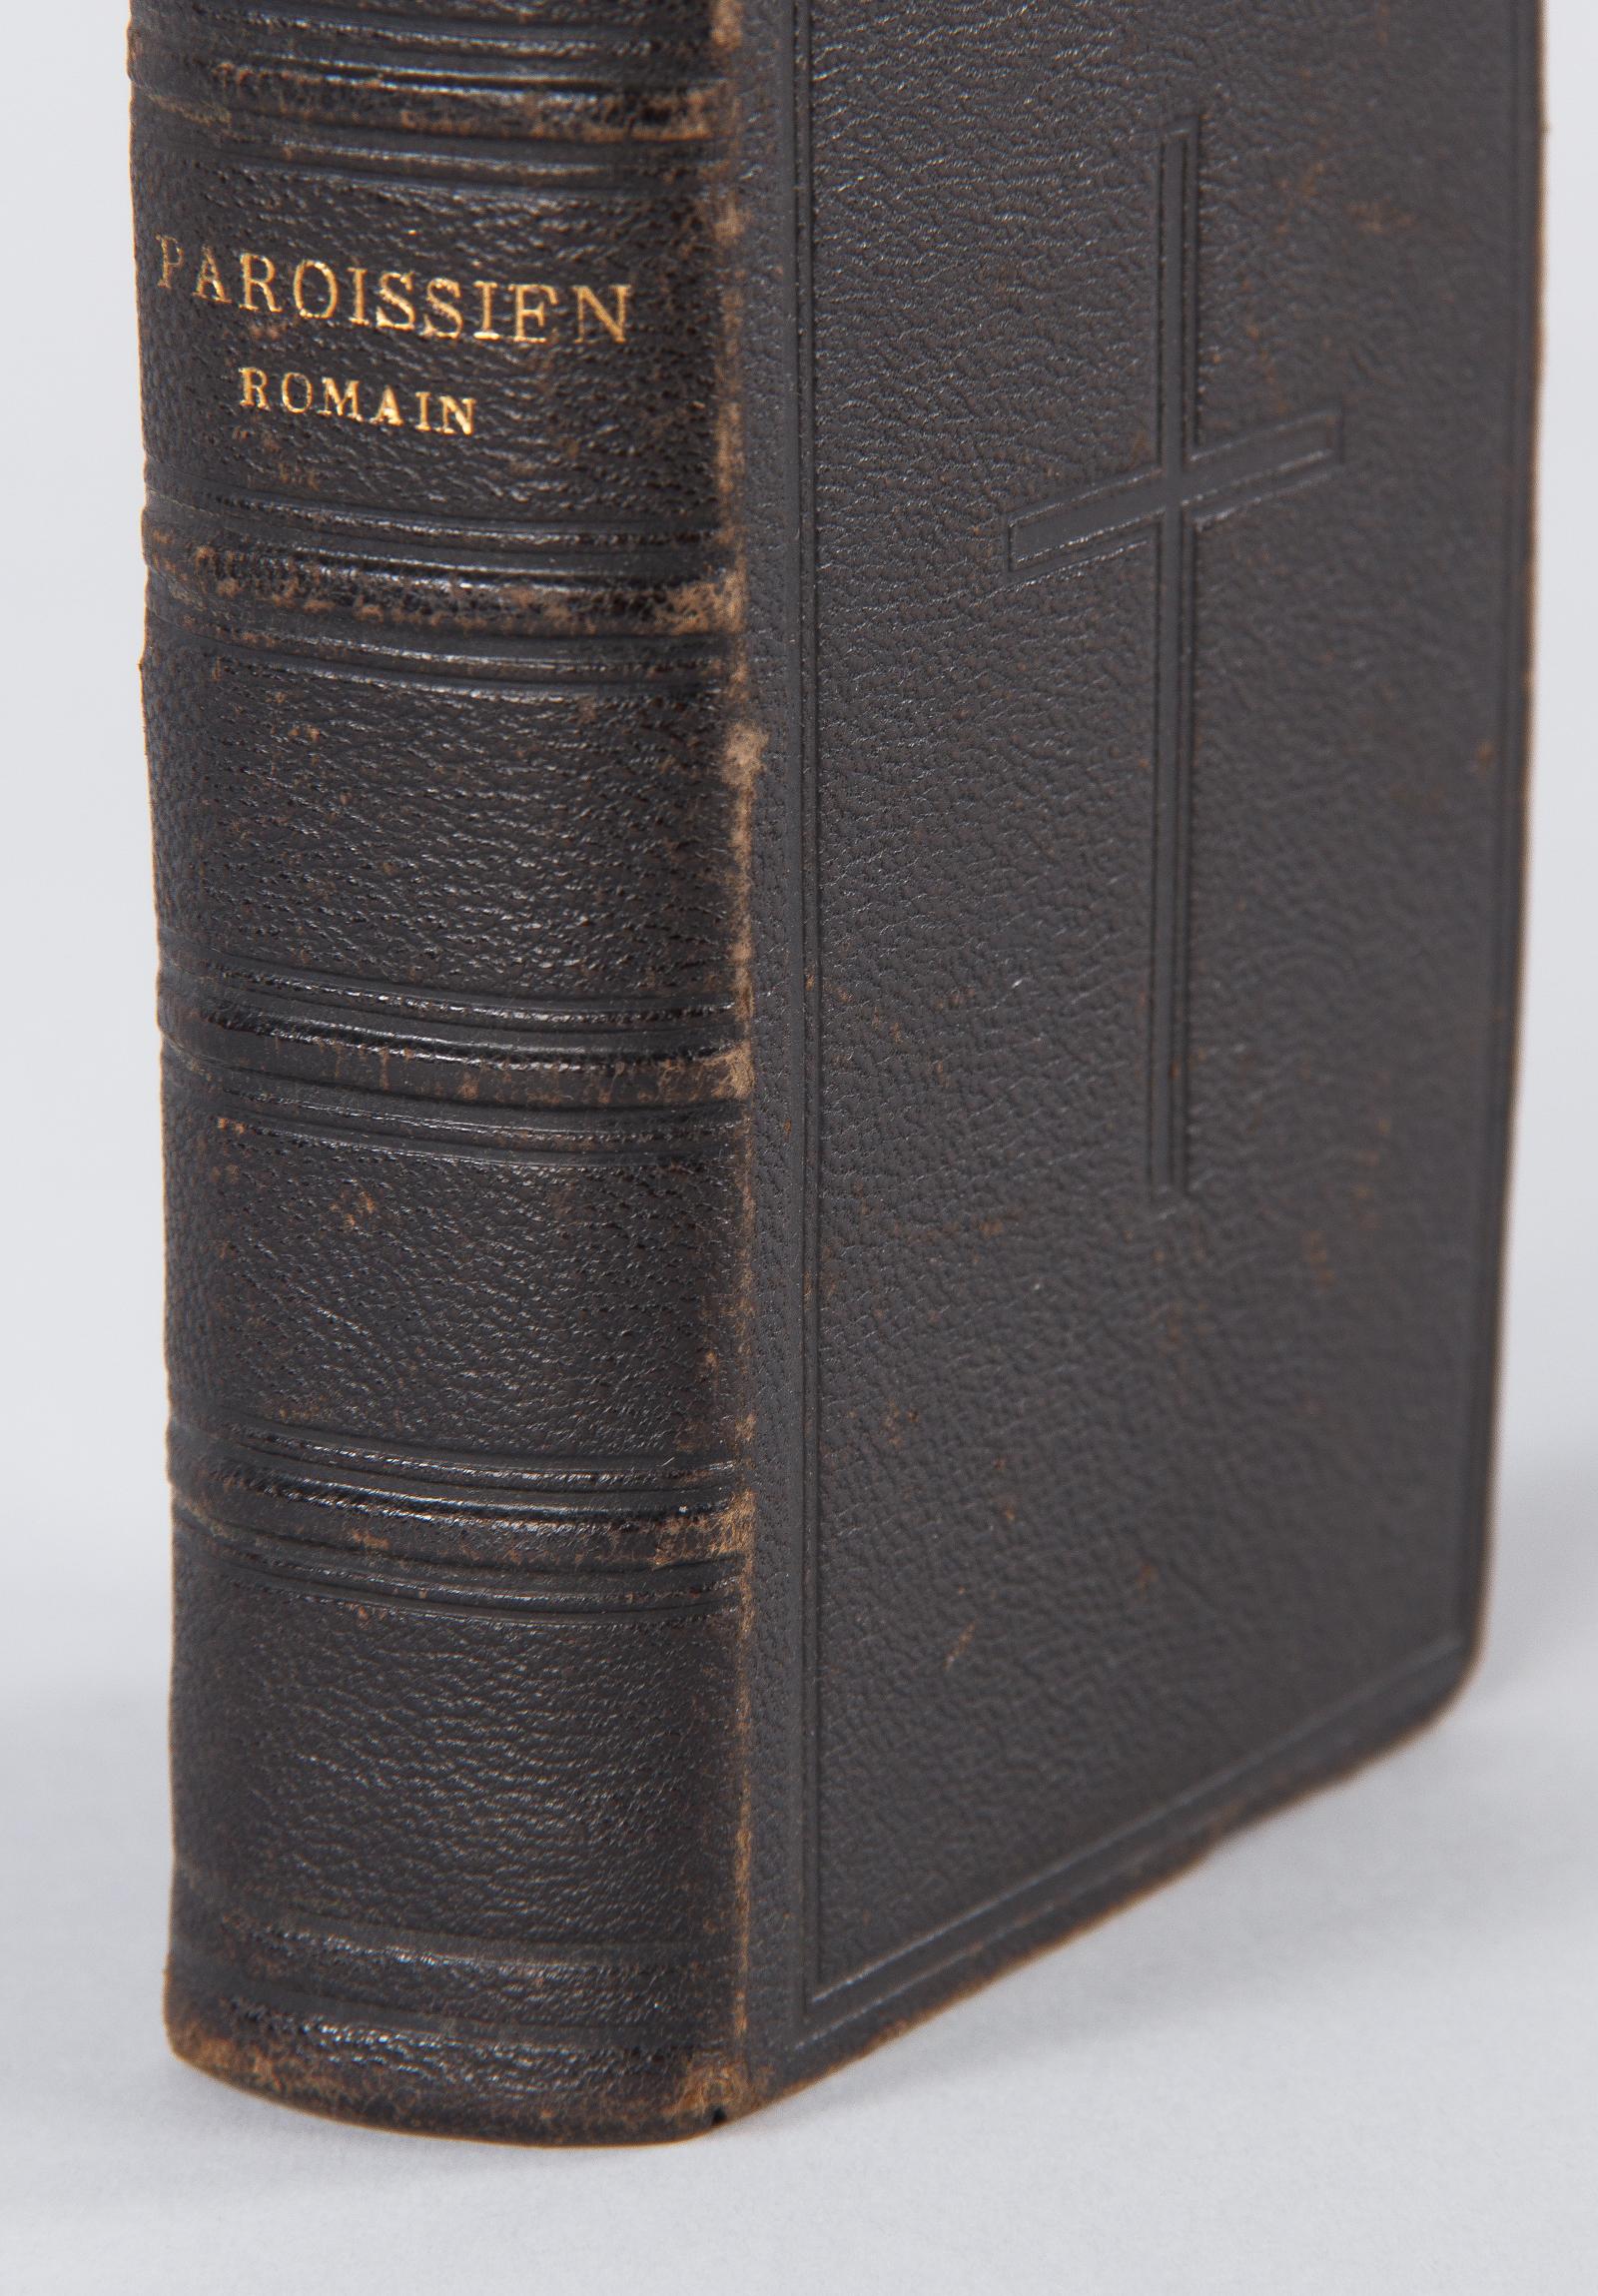 Leather French Missal Book-Paroissien Roman, 1880